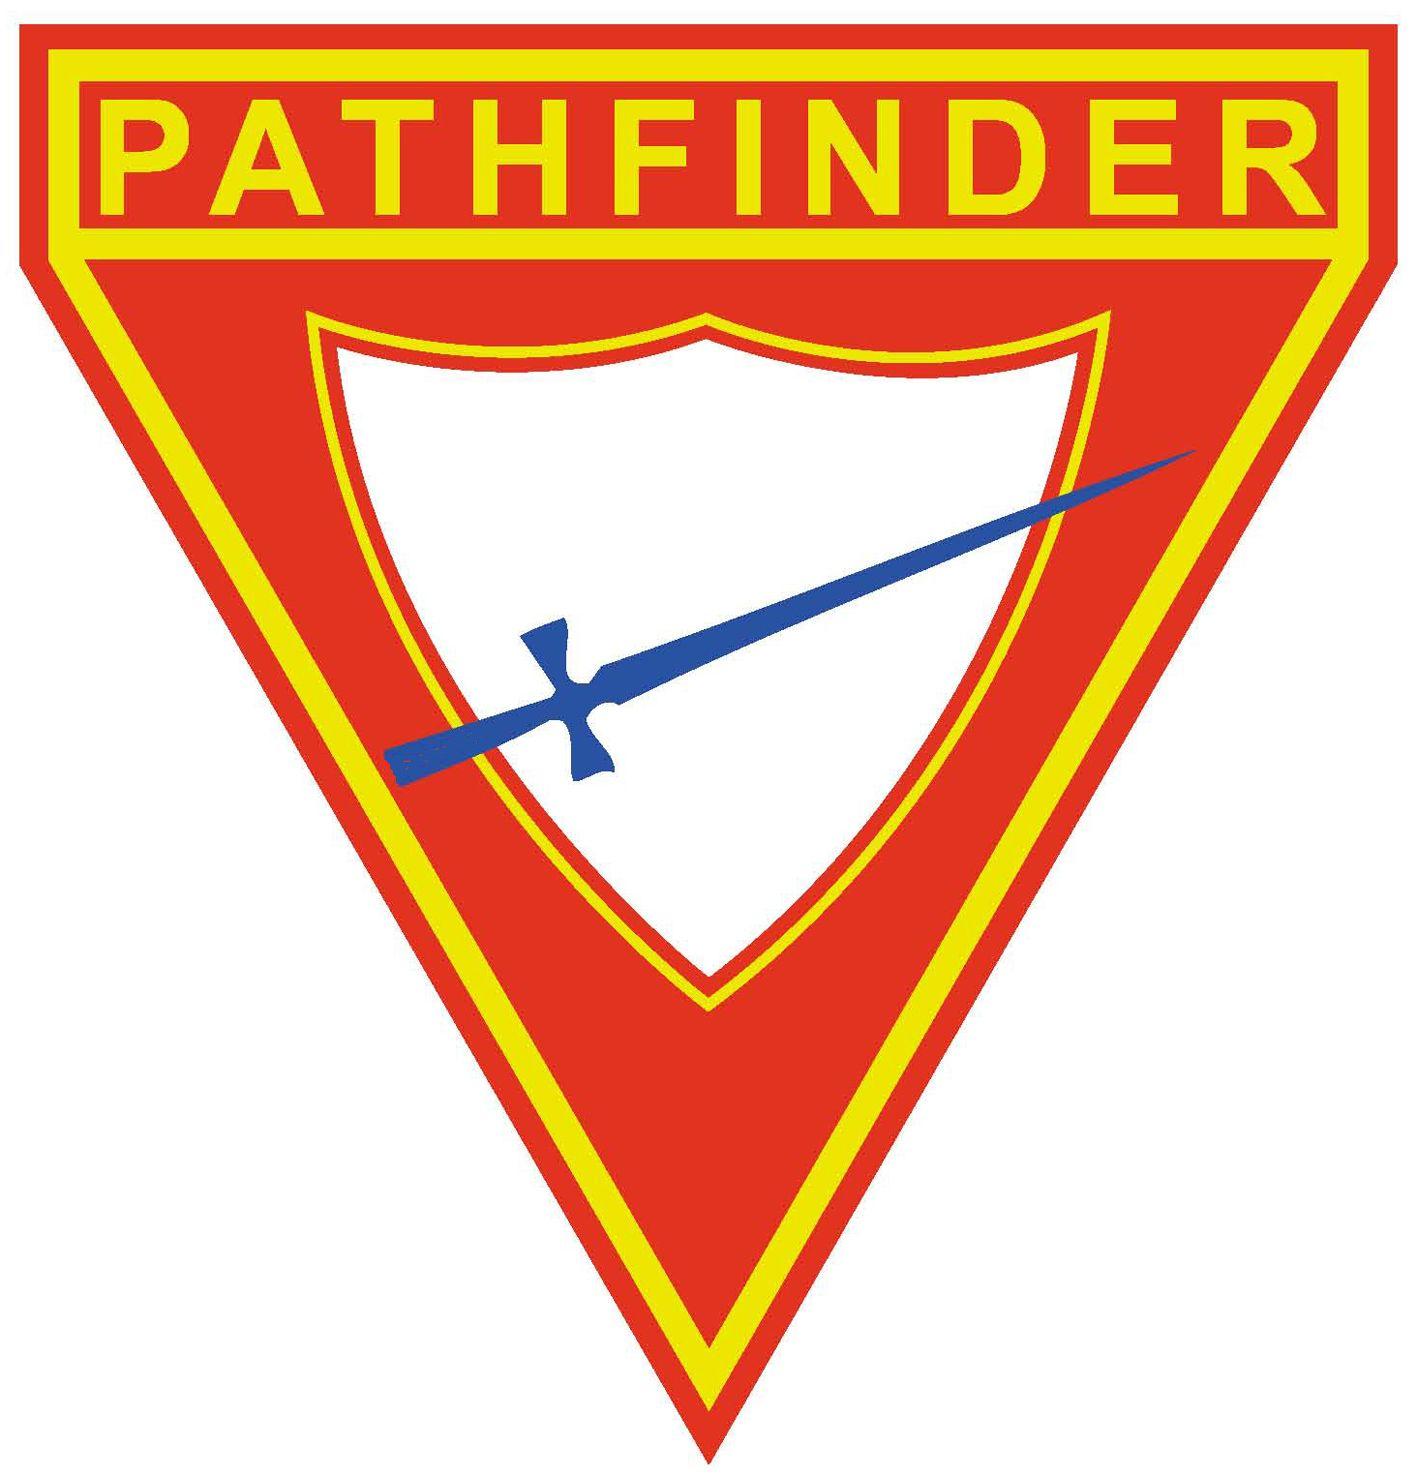 Pathfinder Logo - Pathfinder Club Logos Youth Ministries